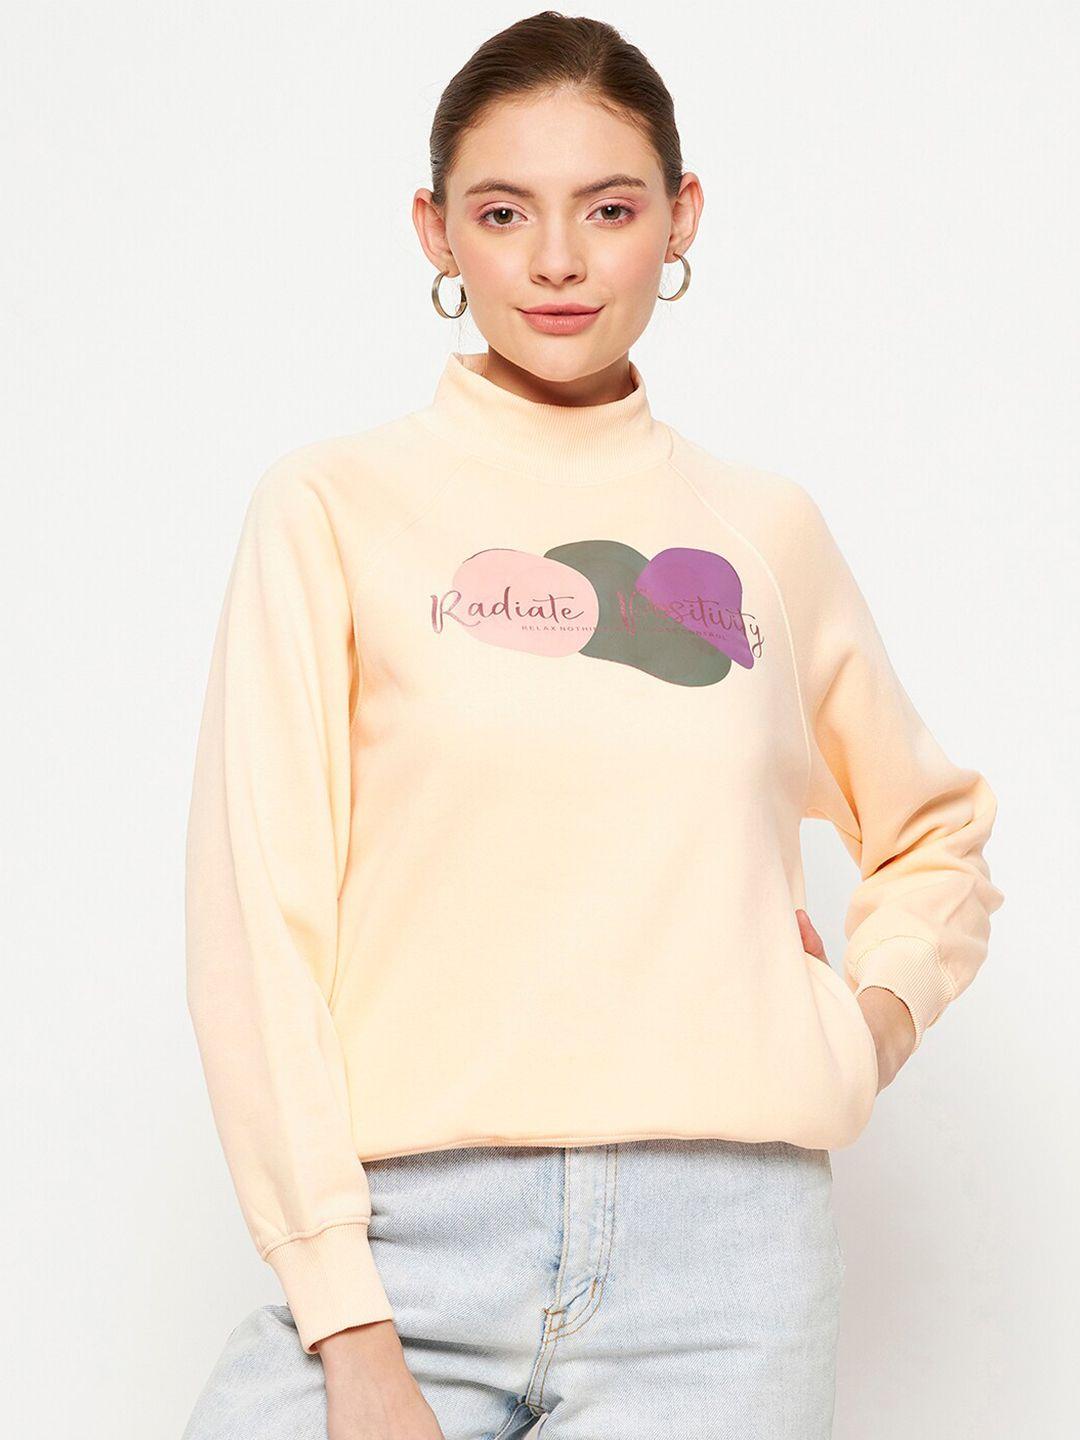 madame graphic printed cotton pullover sweatshirt